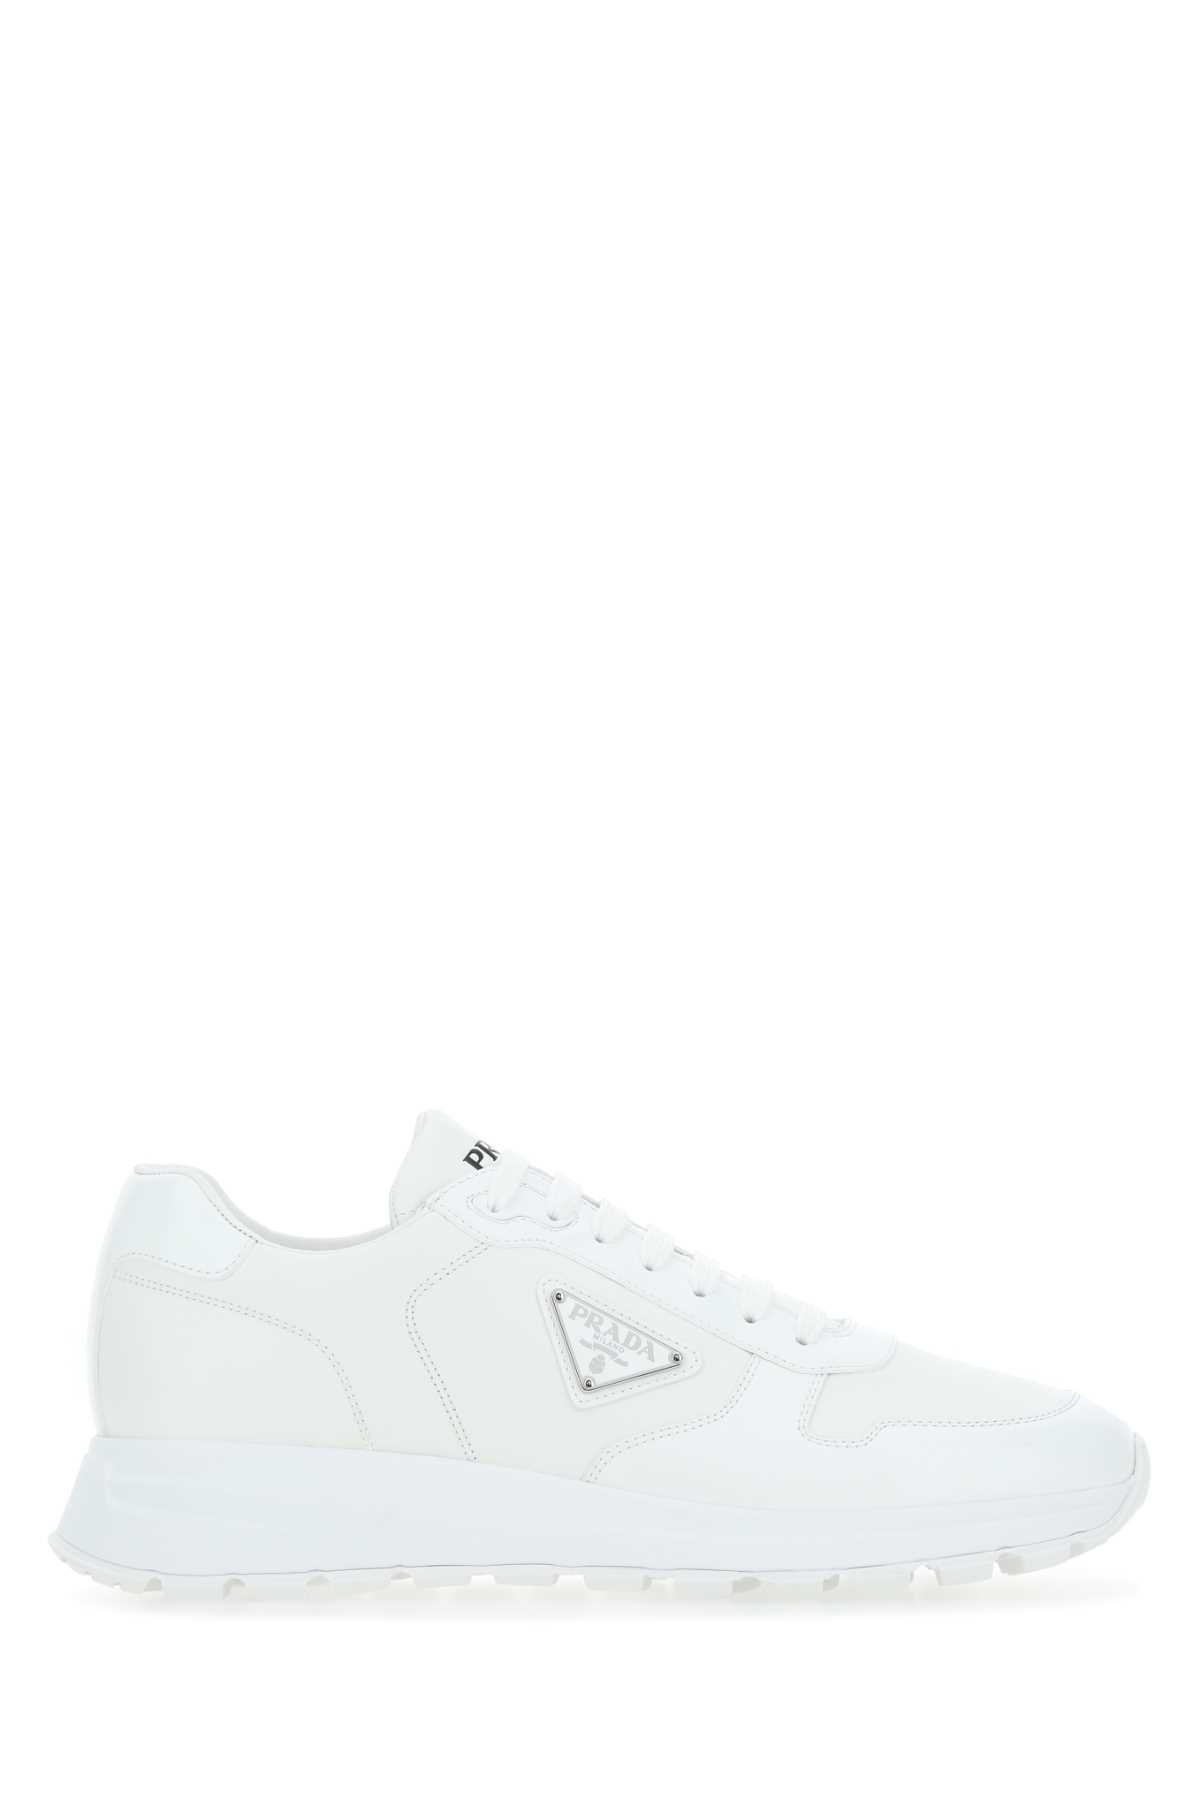 Prada White Re-nylon And Leather Sneakers